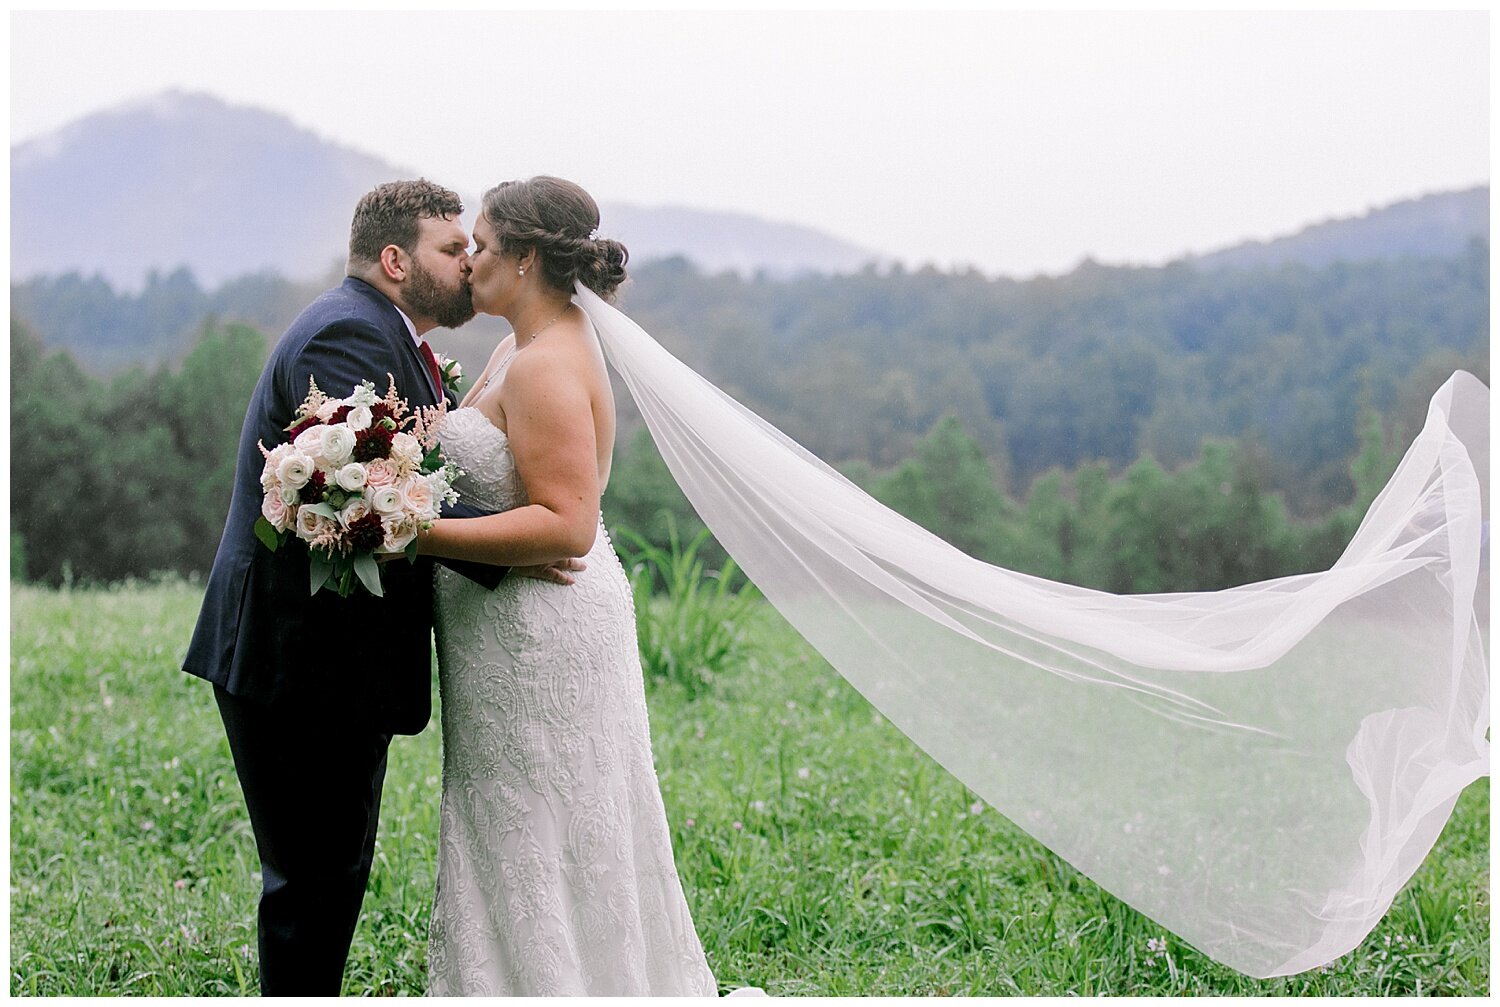 MJ Mendoza Photography | Richmond VA Wedding Photographer